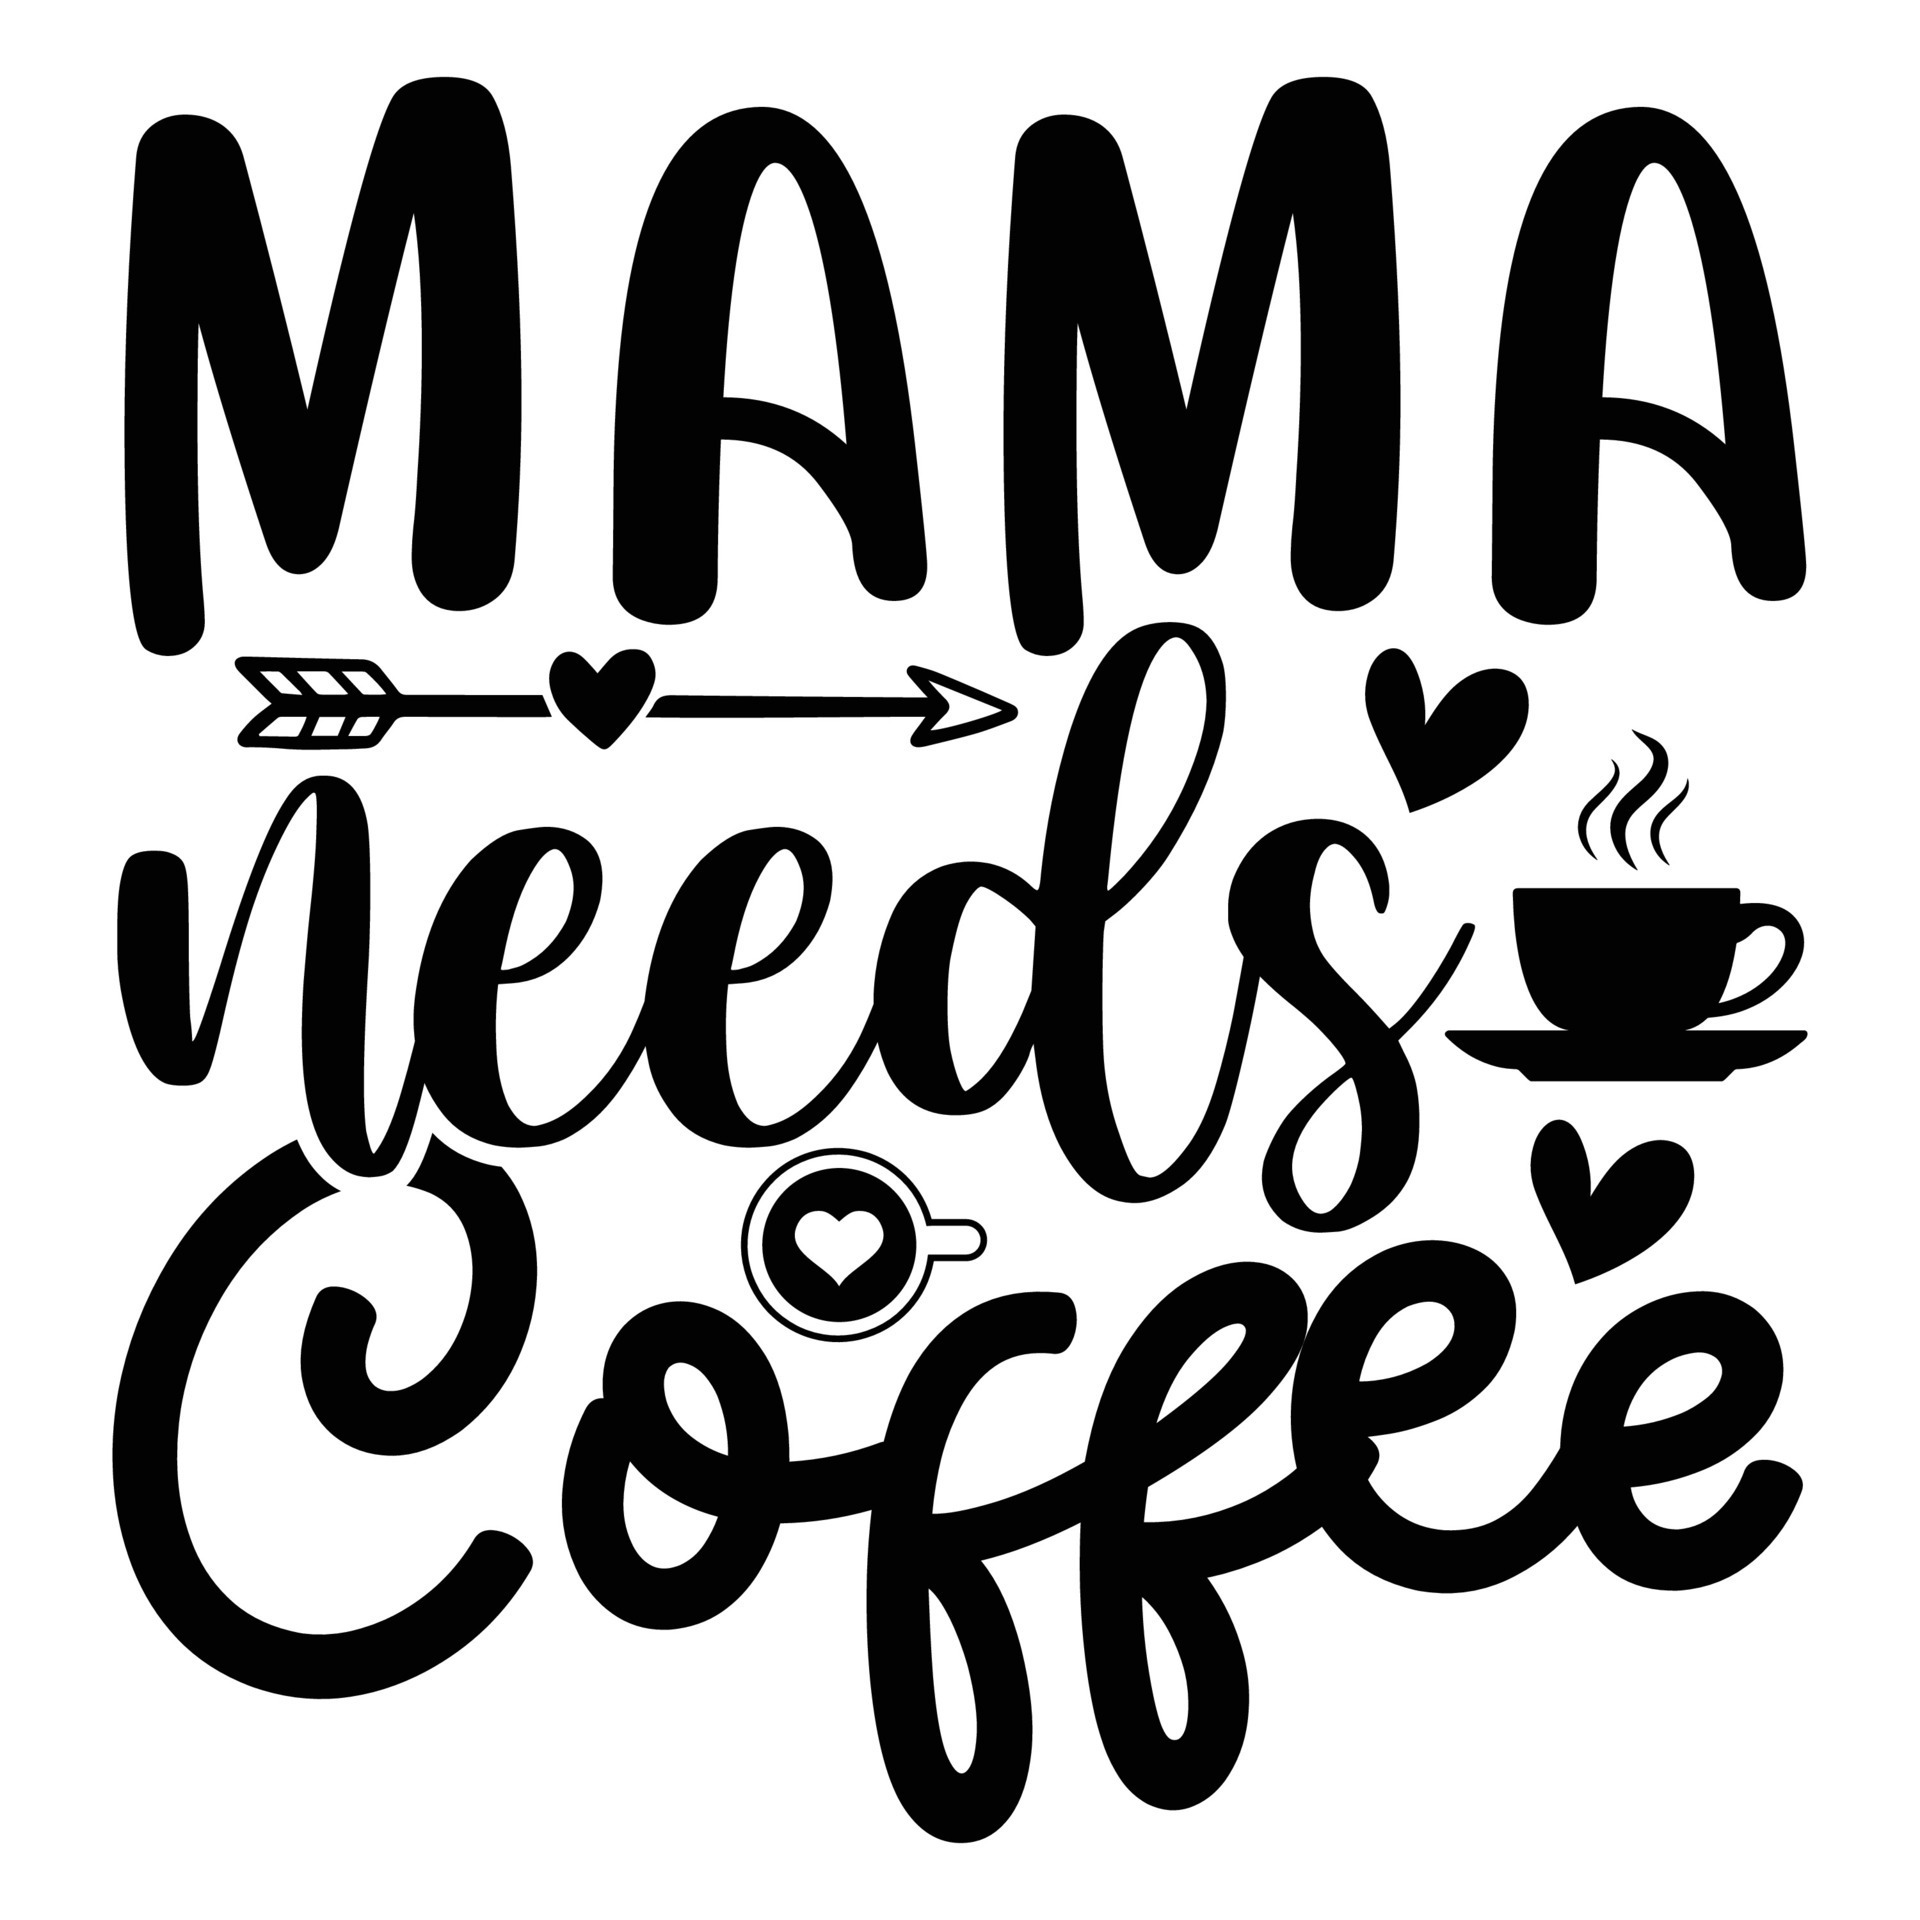 https://static.vecteezy.com/system/resources/previews/025/407/893/original/mama-needs-coffee-vector.jpg